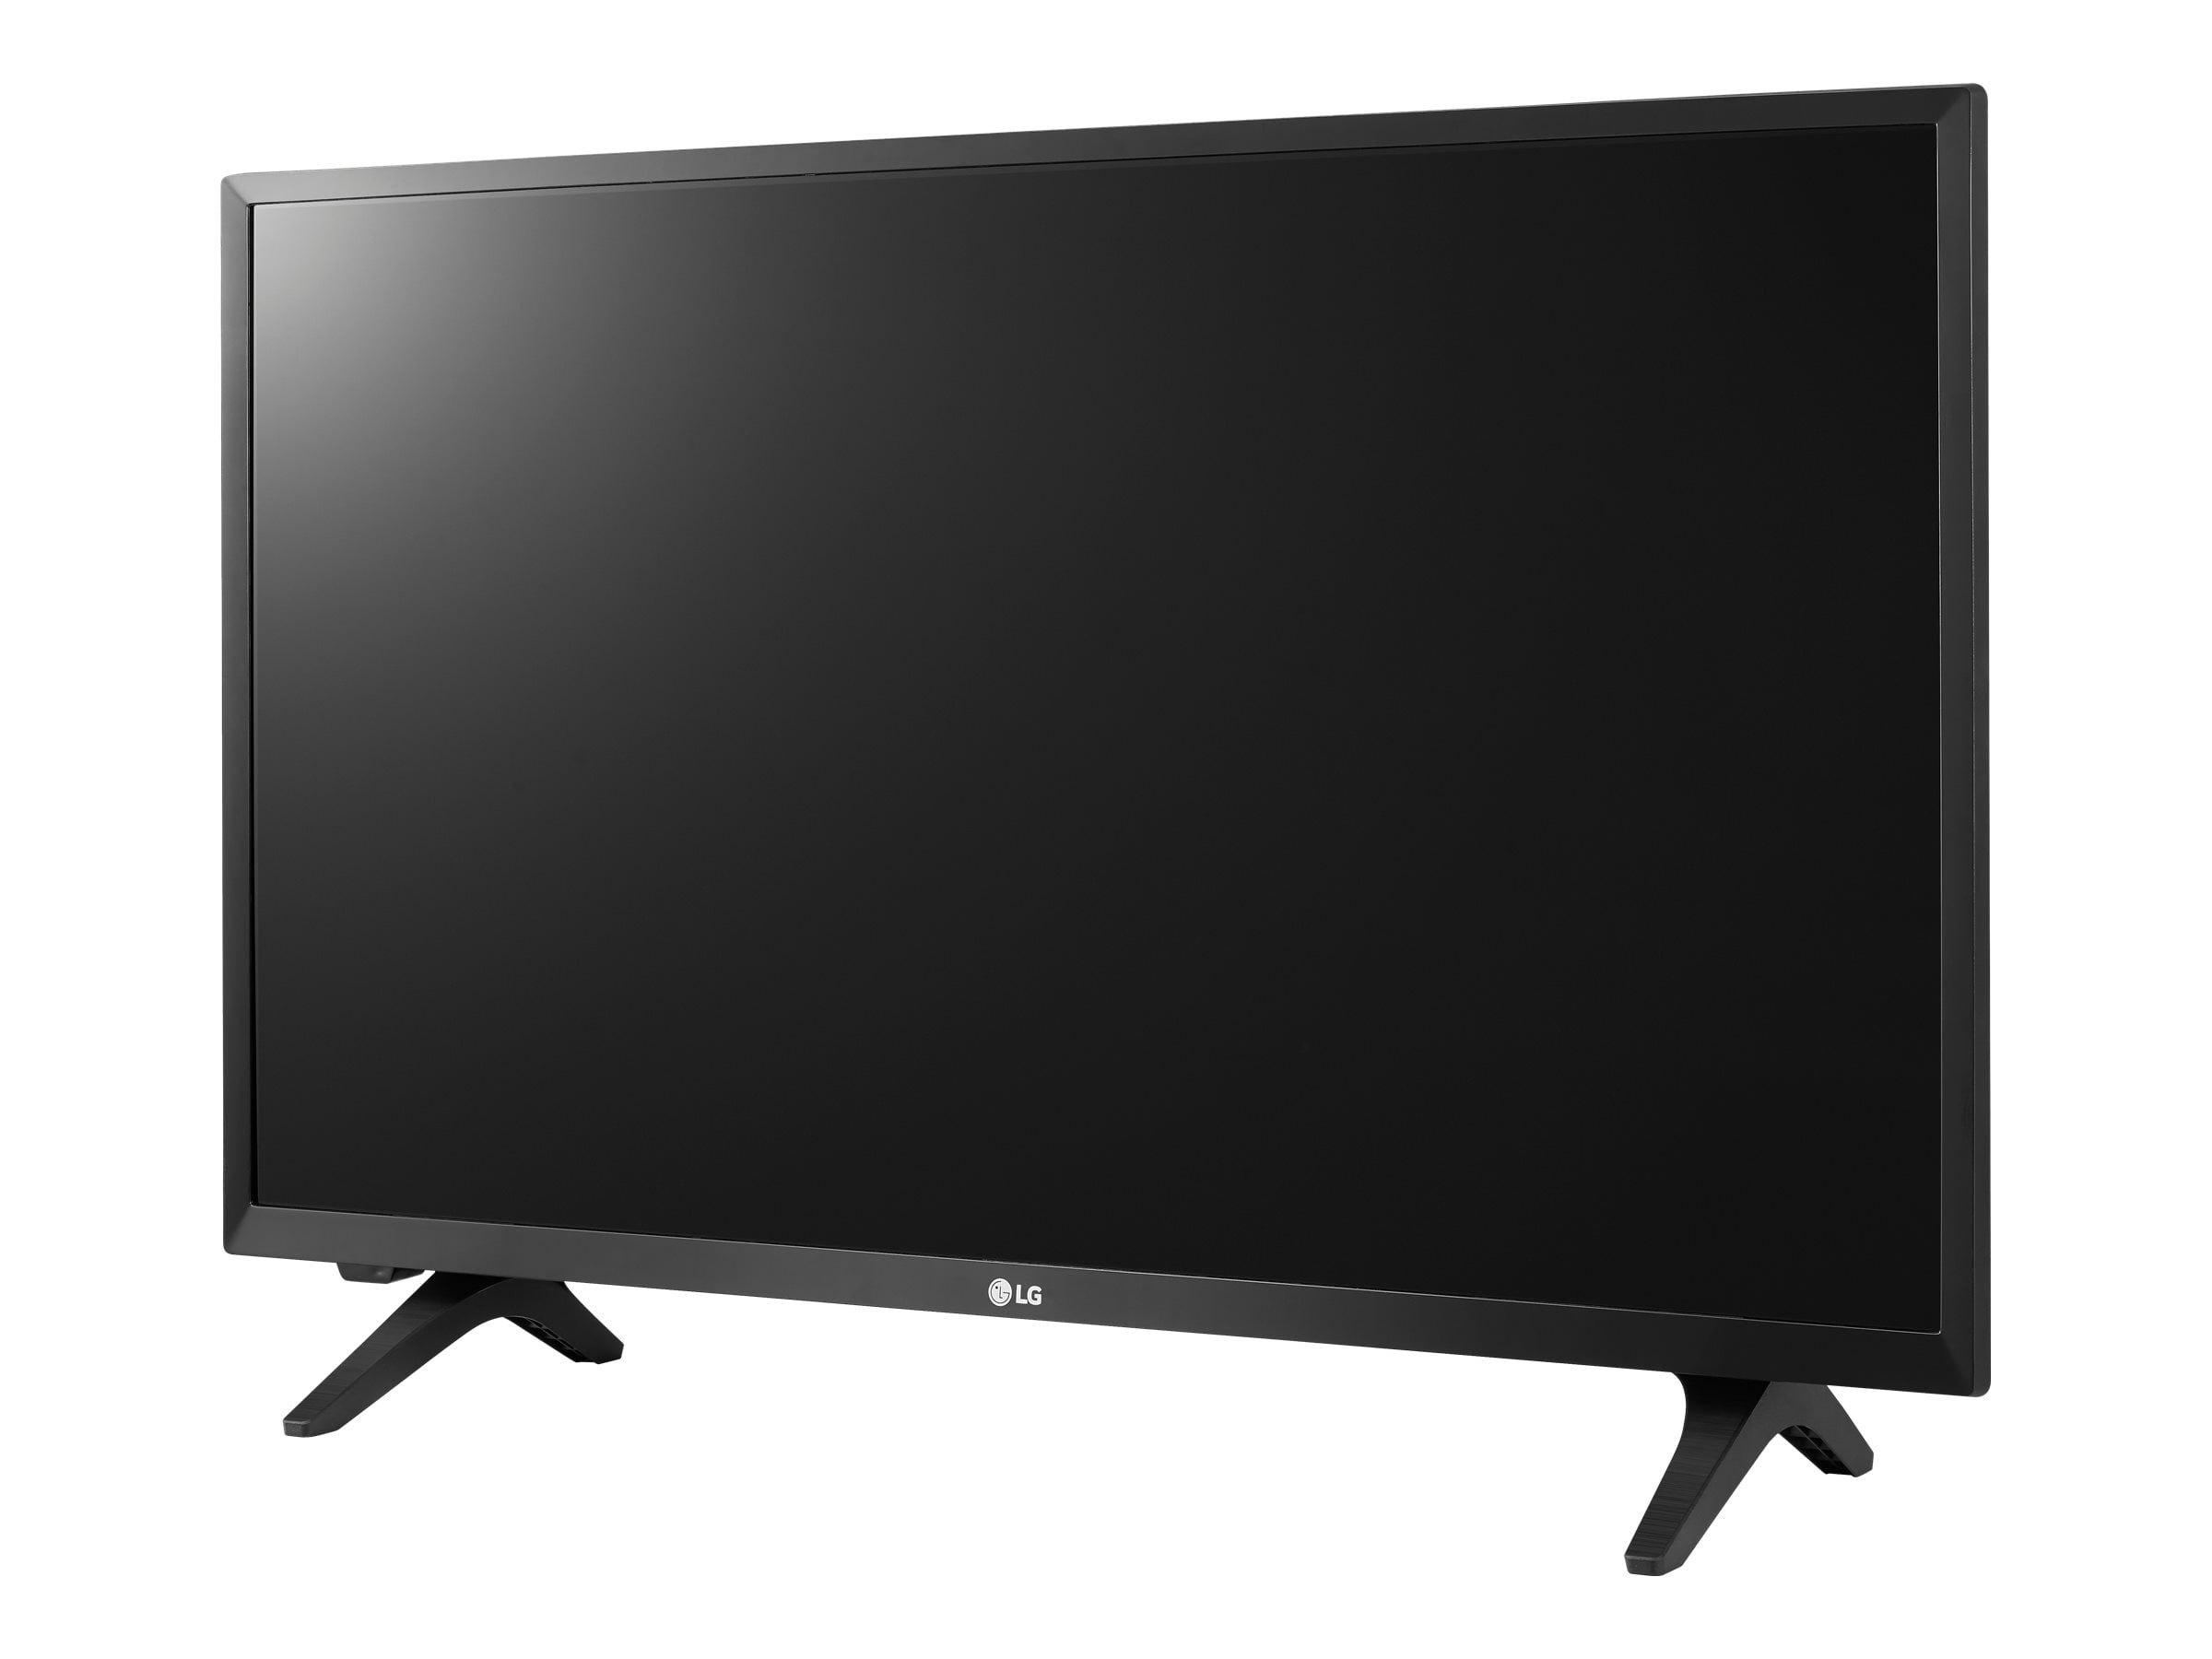 Forbyde Perforering Socialisme LG 28" Class HD (720p) LED HDTV (28LJ430B-PU) - Walmart.com